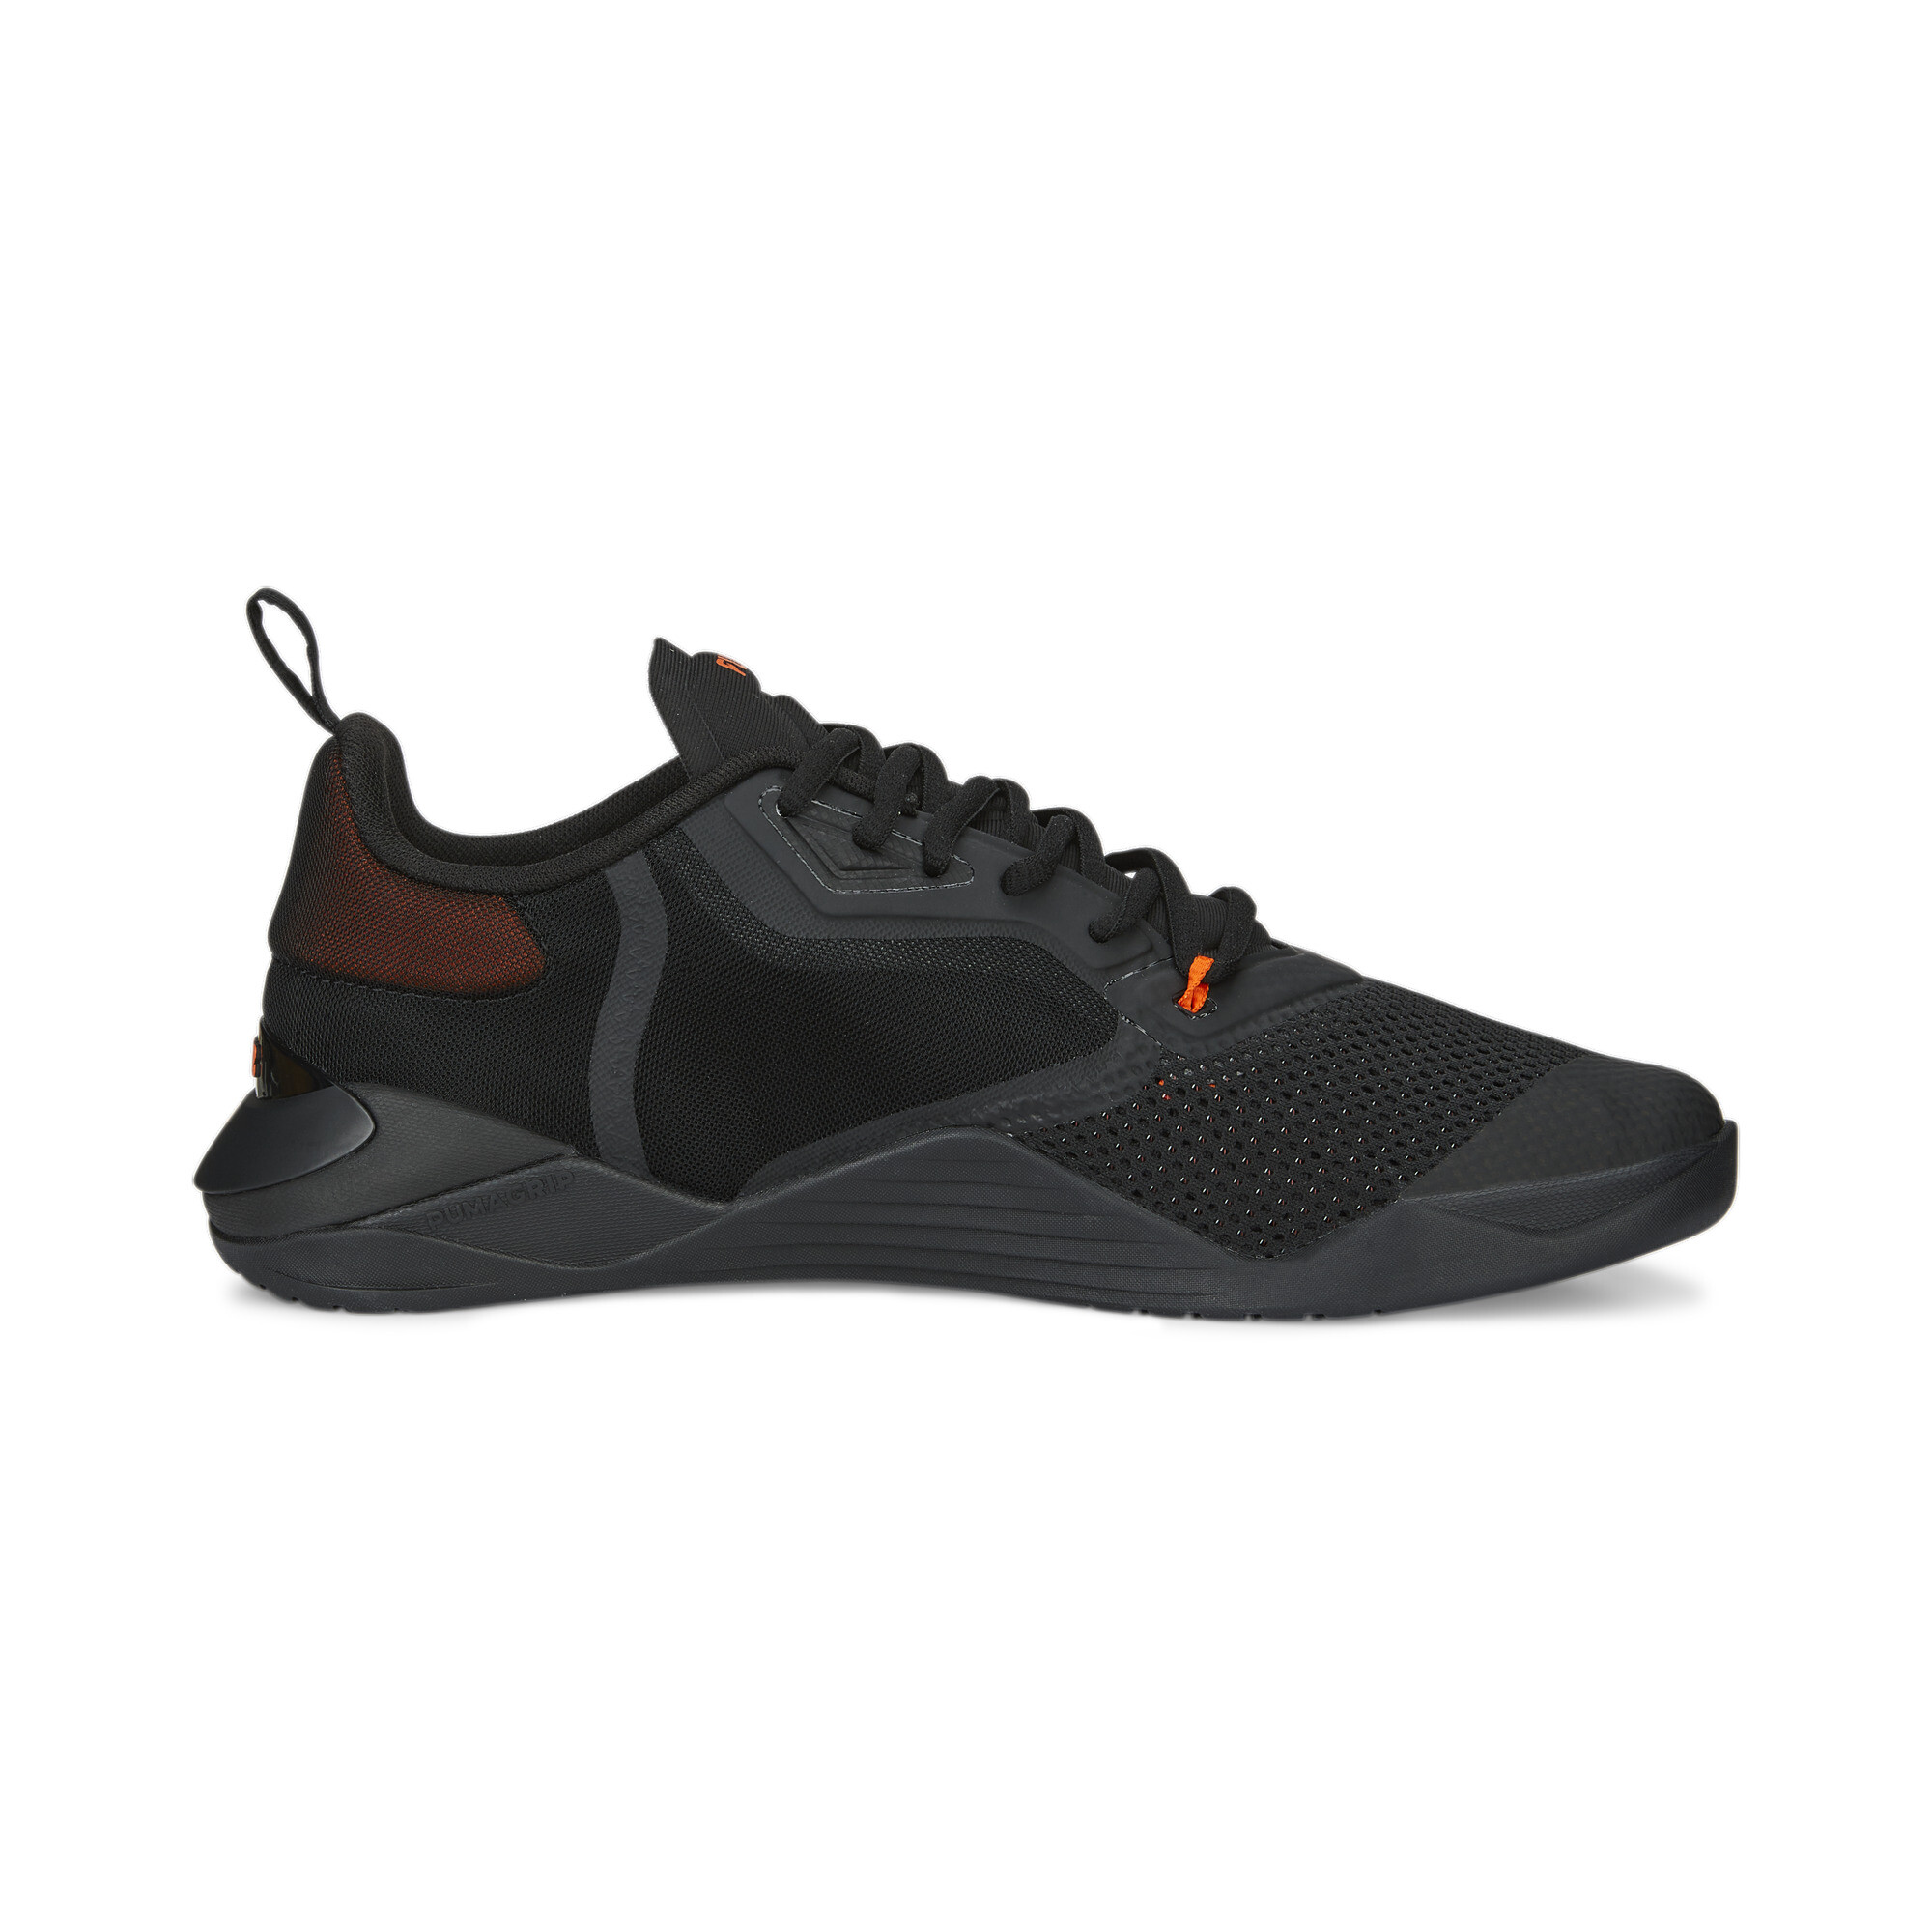 Men's PUMA Fuse 2.0 Training Shoes In Black, Size EU 39